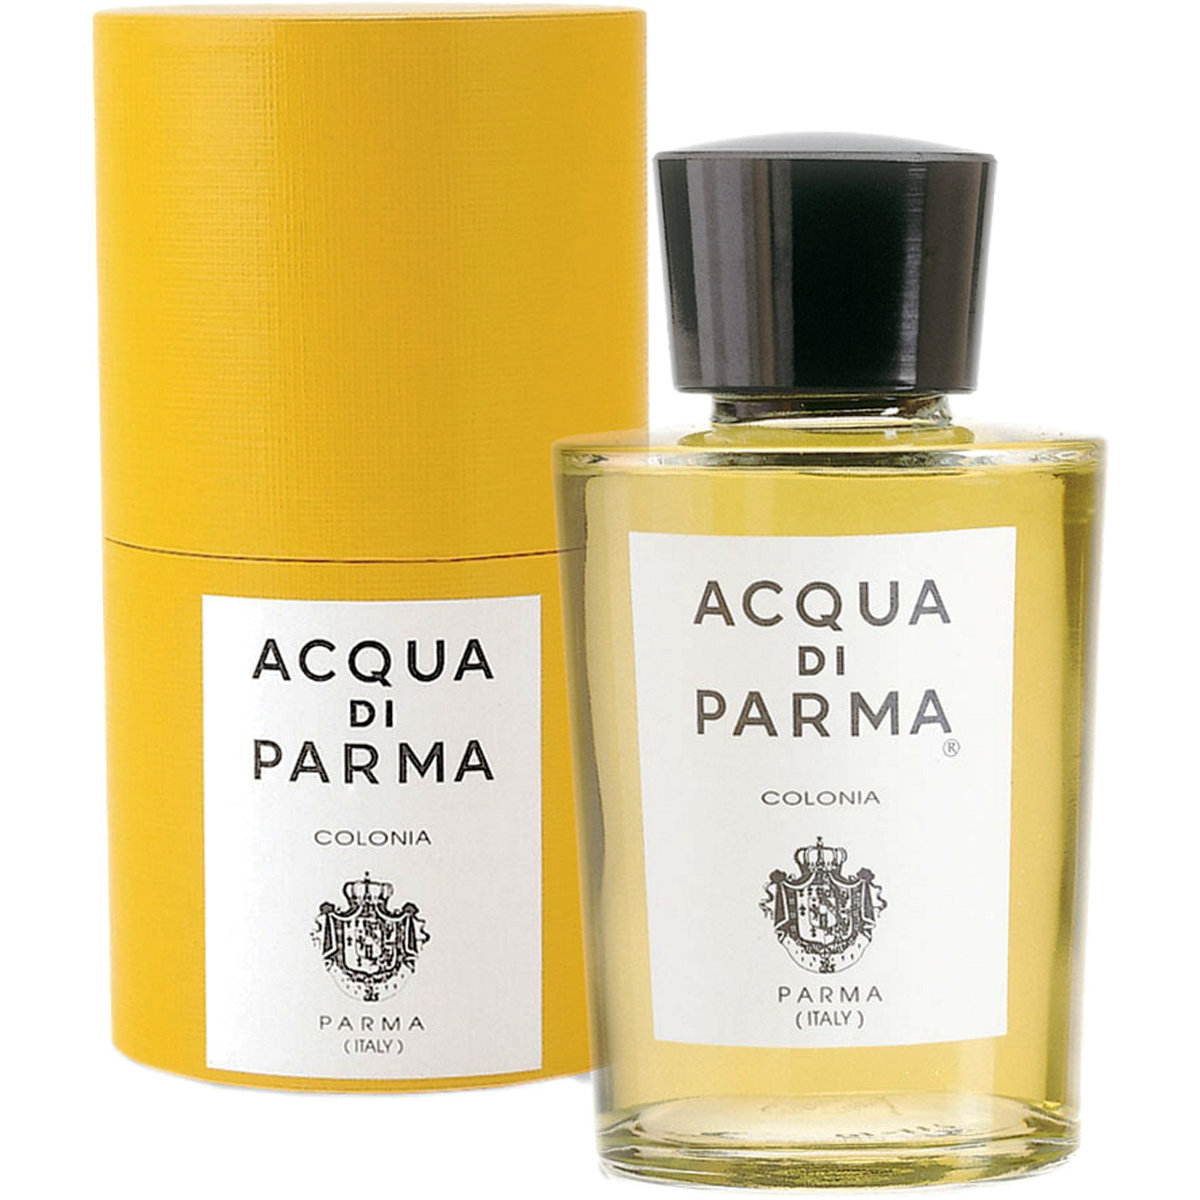 Acqua Di Parma Perfumes - My FAVORITE FRAGRANCES for men and women